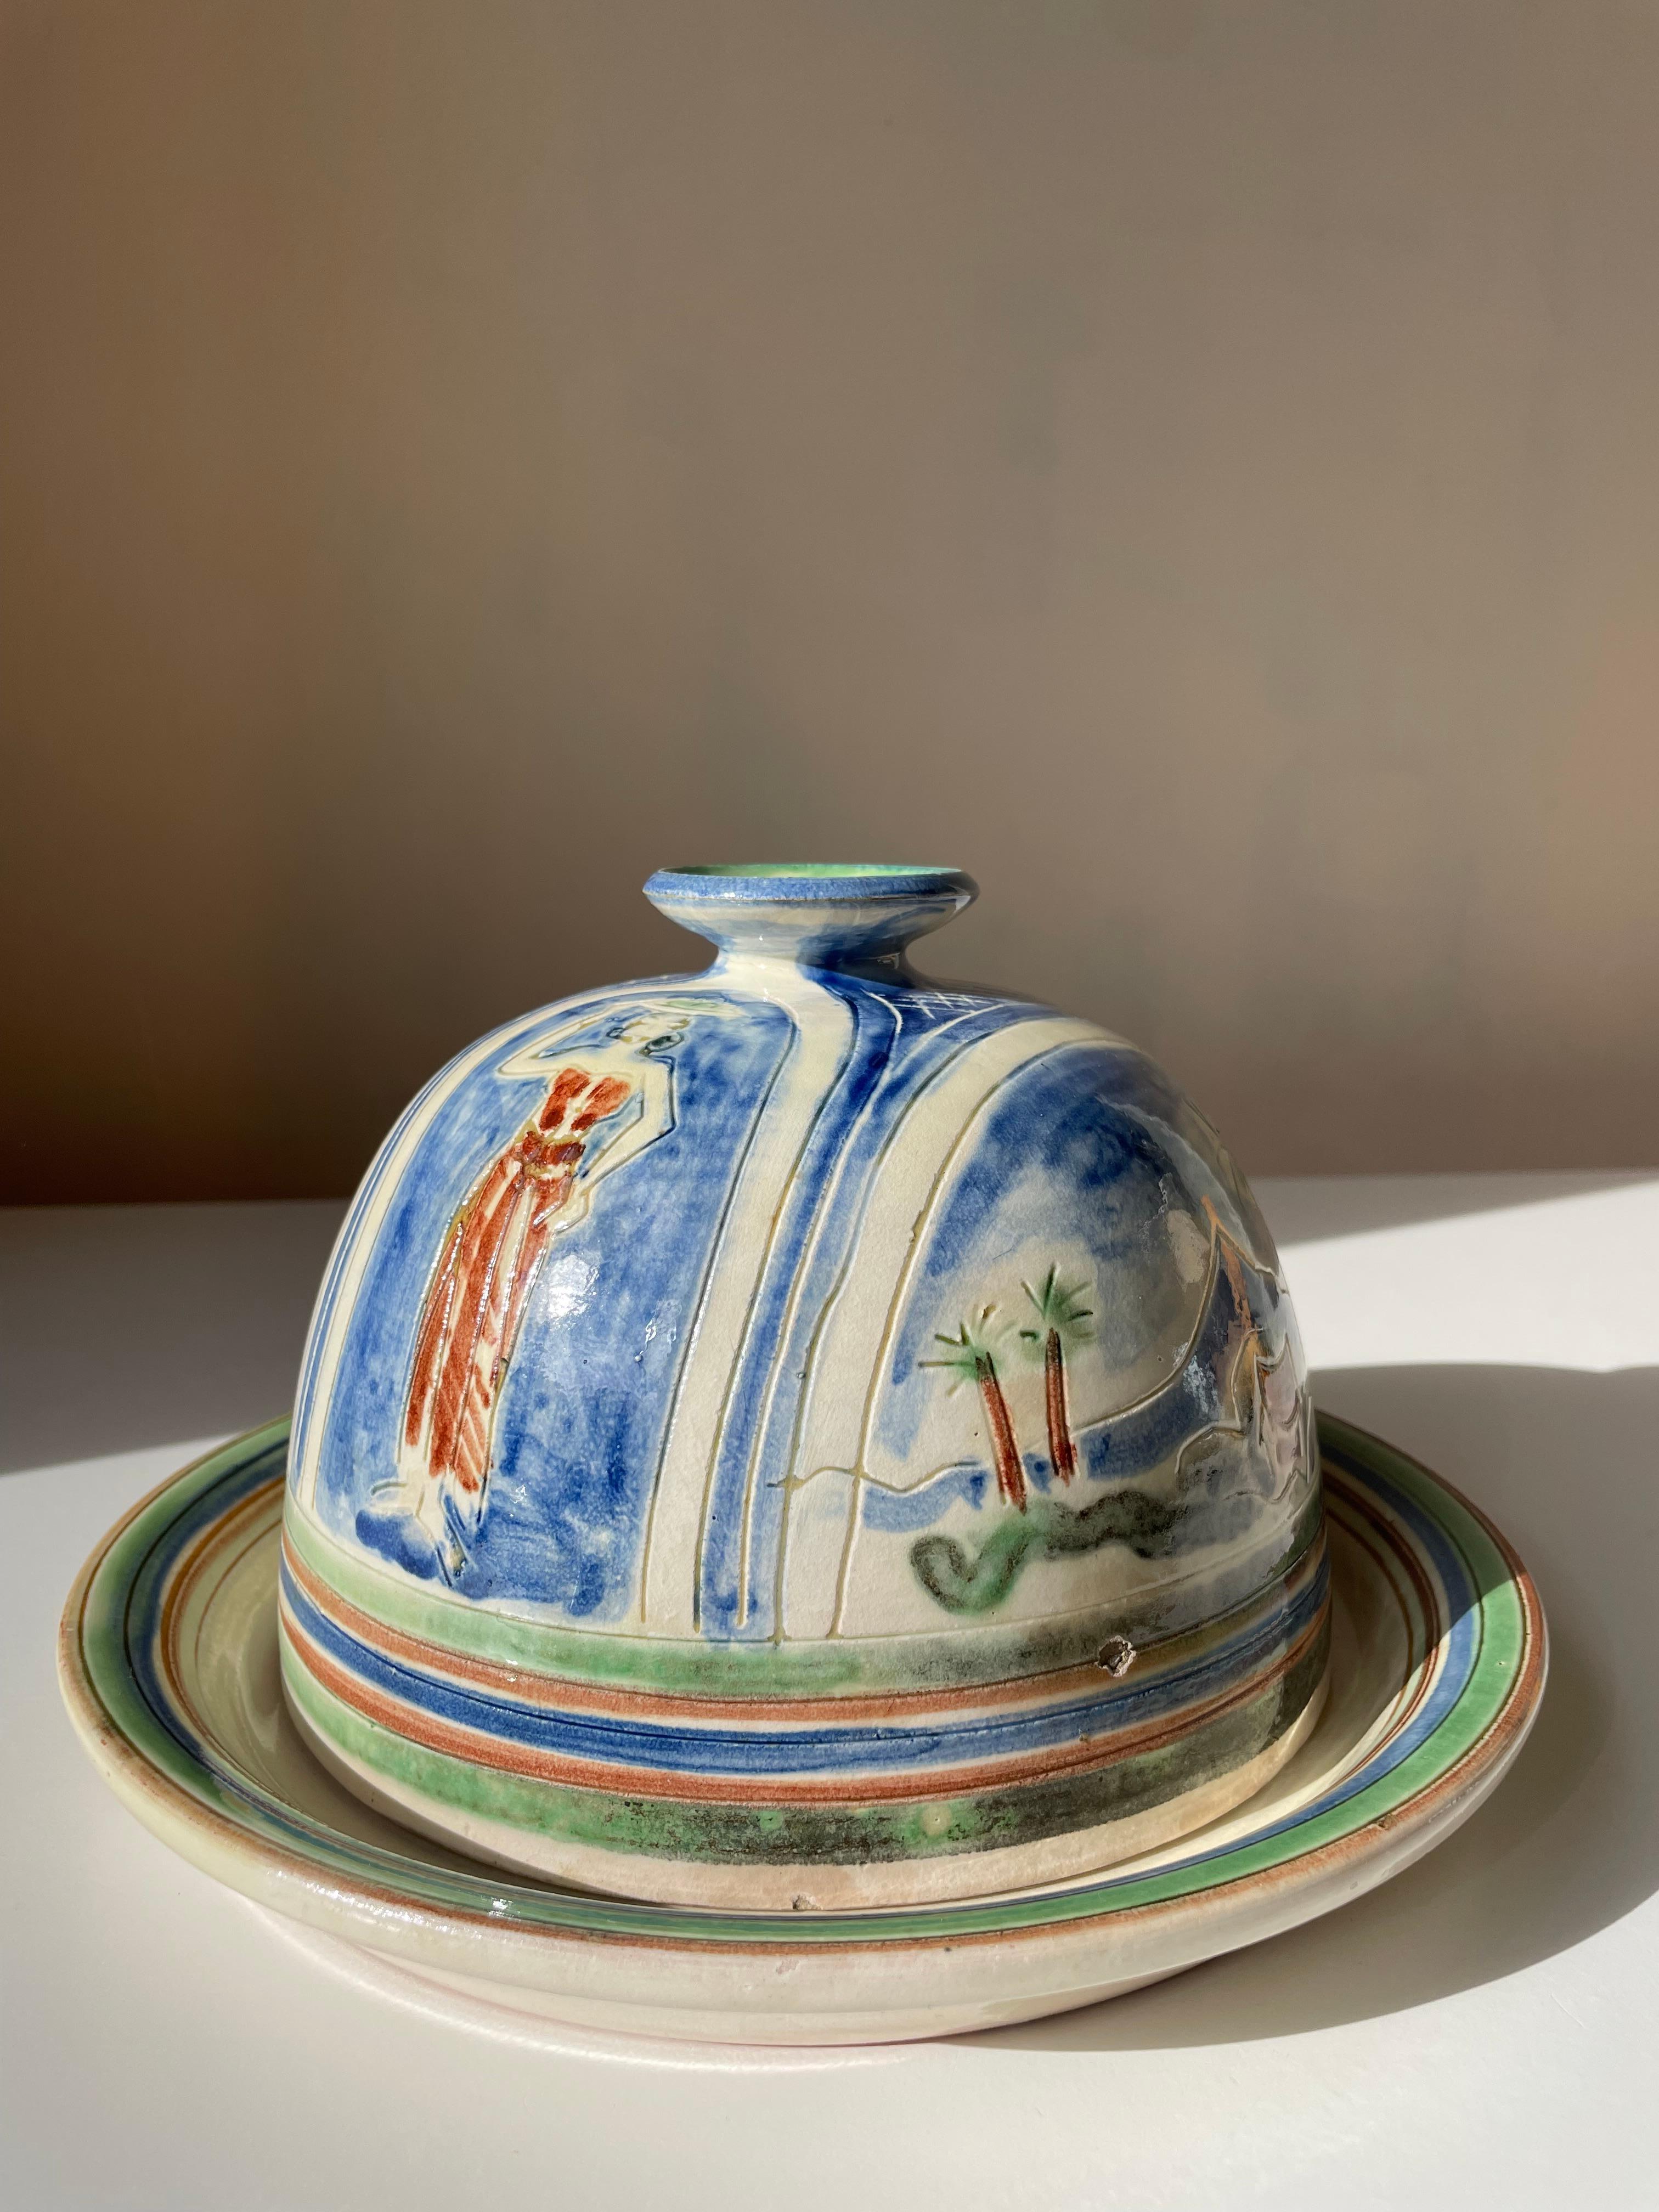 Handmade Danish 1950s Tropic Decor Ceramic Dome And Plate For Sale 1